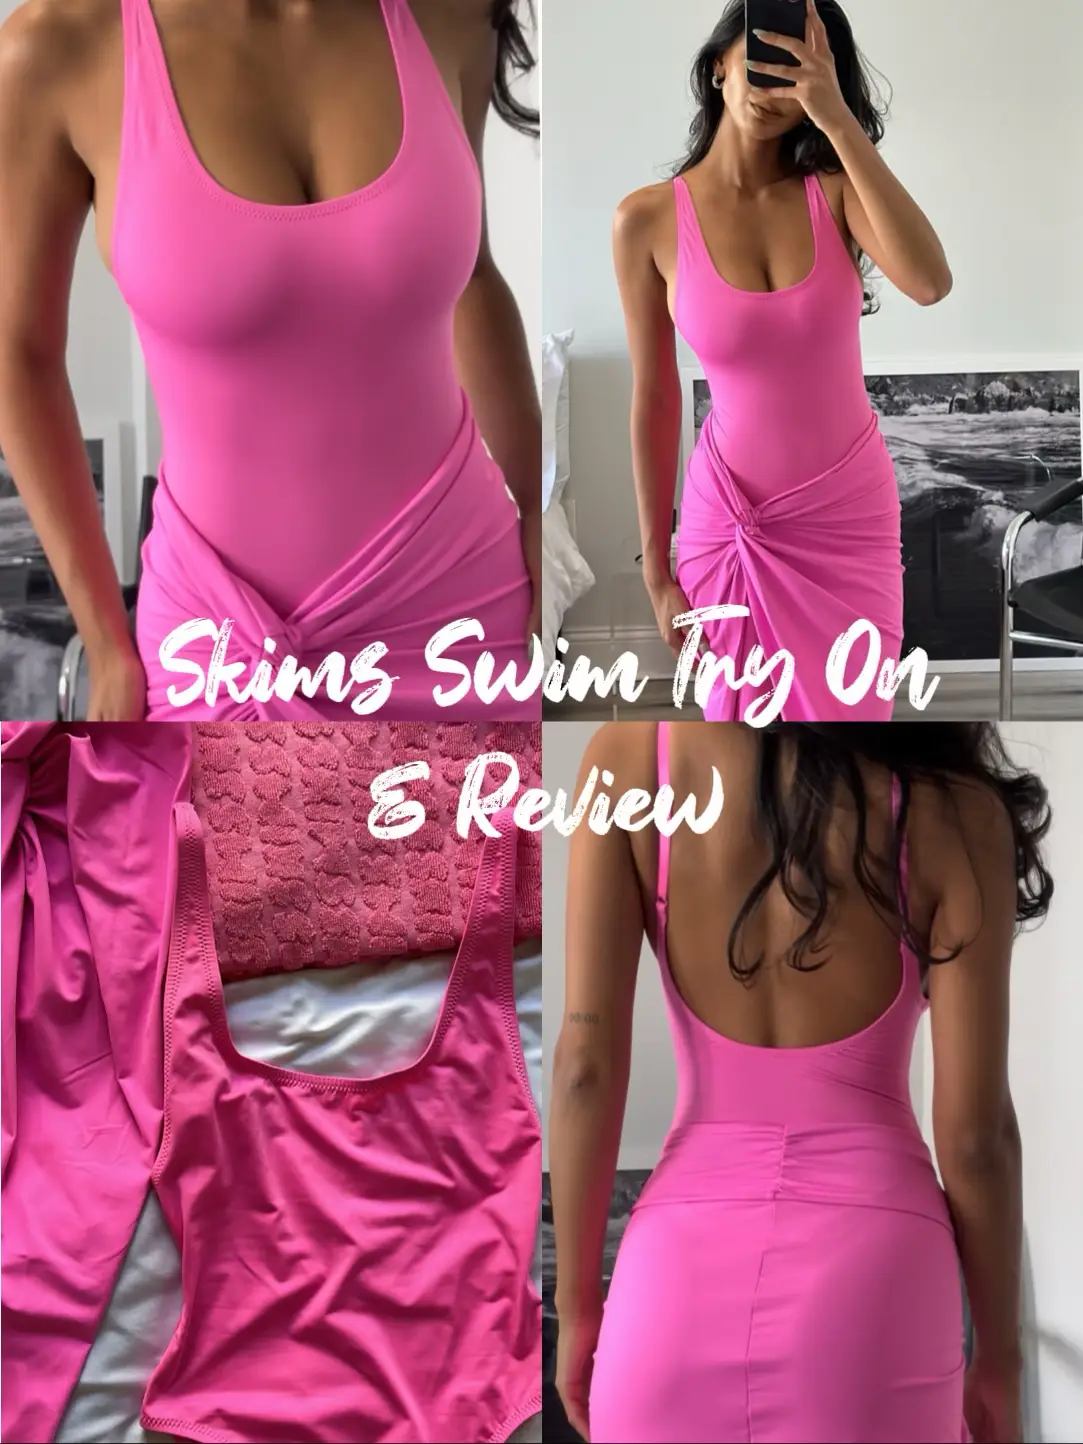 Skims Swim: Turquoise Bikini Review